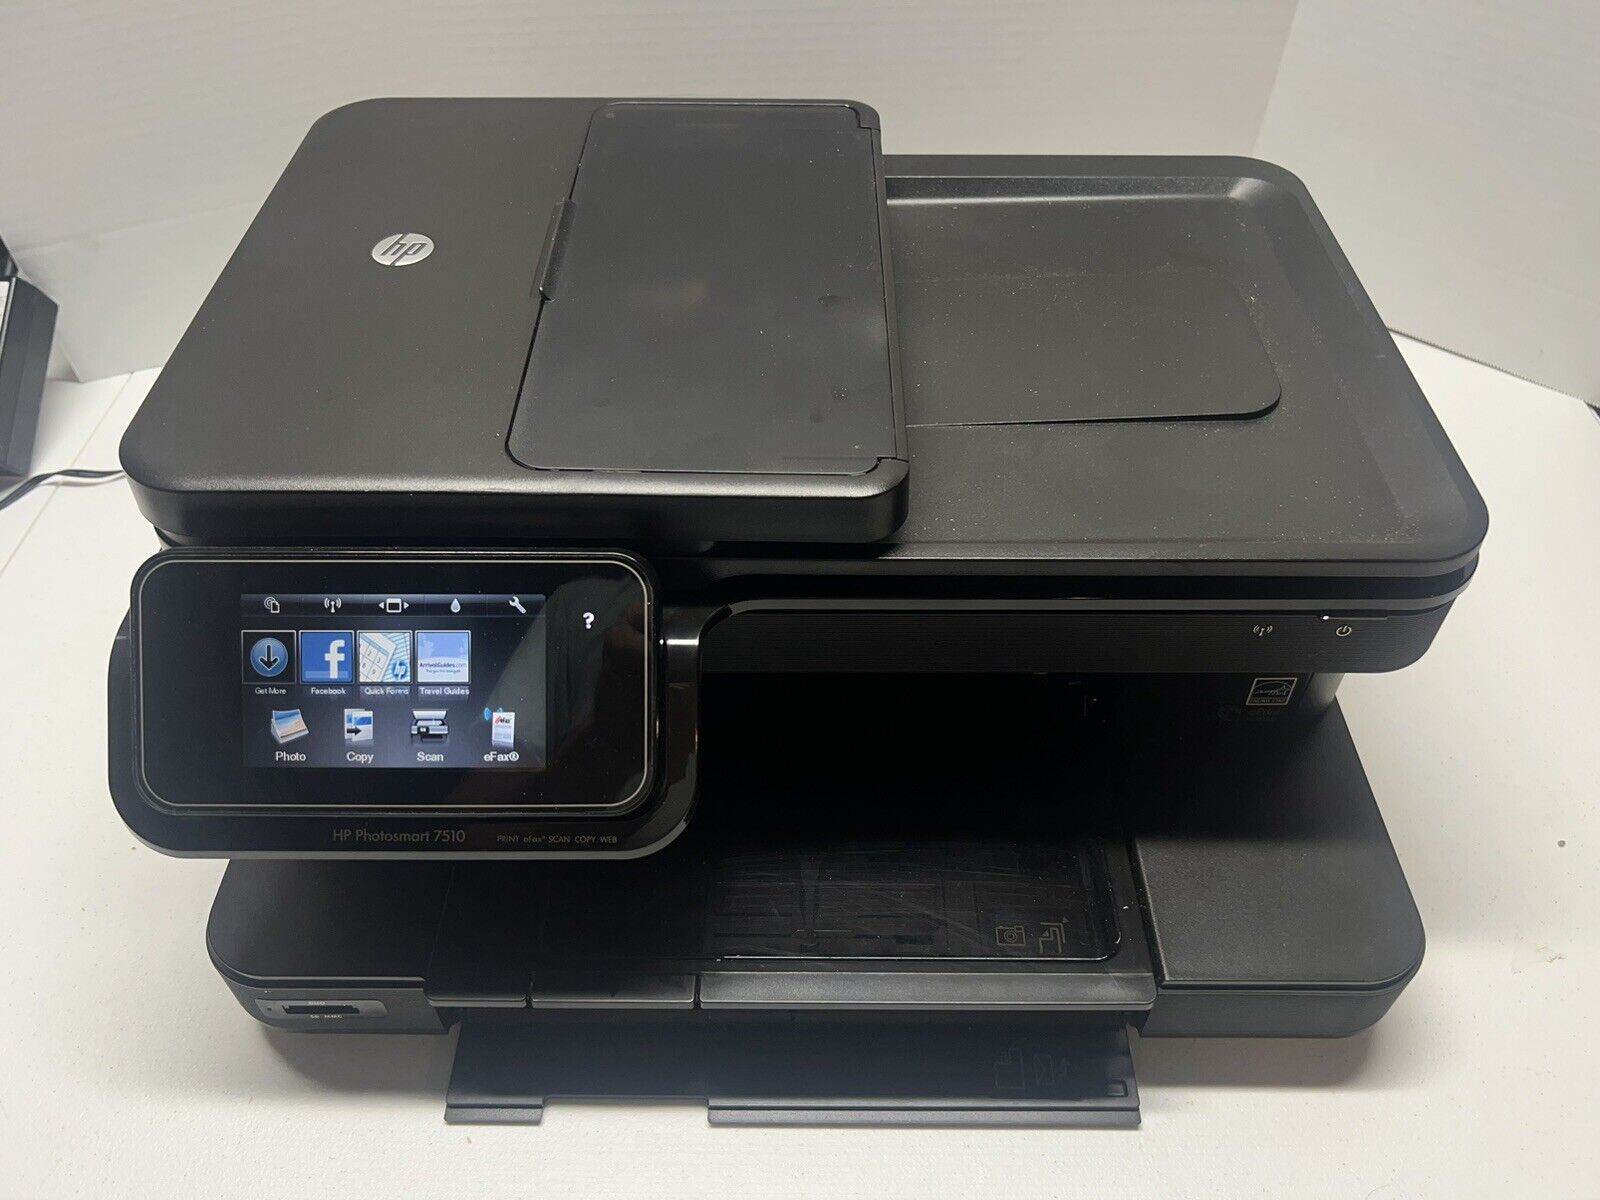 HP Photosmart 7510 e-All-in-One Wireless Inkjet Printer - Power Tested